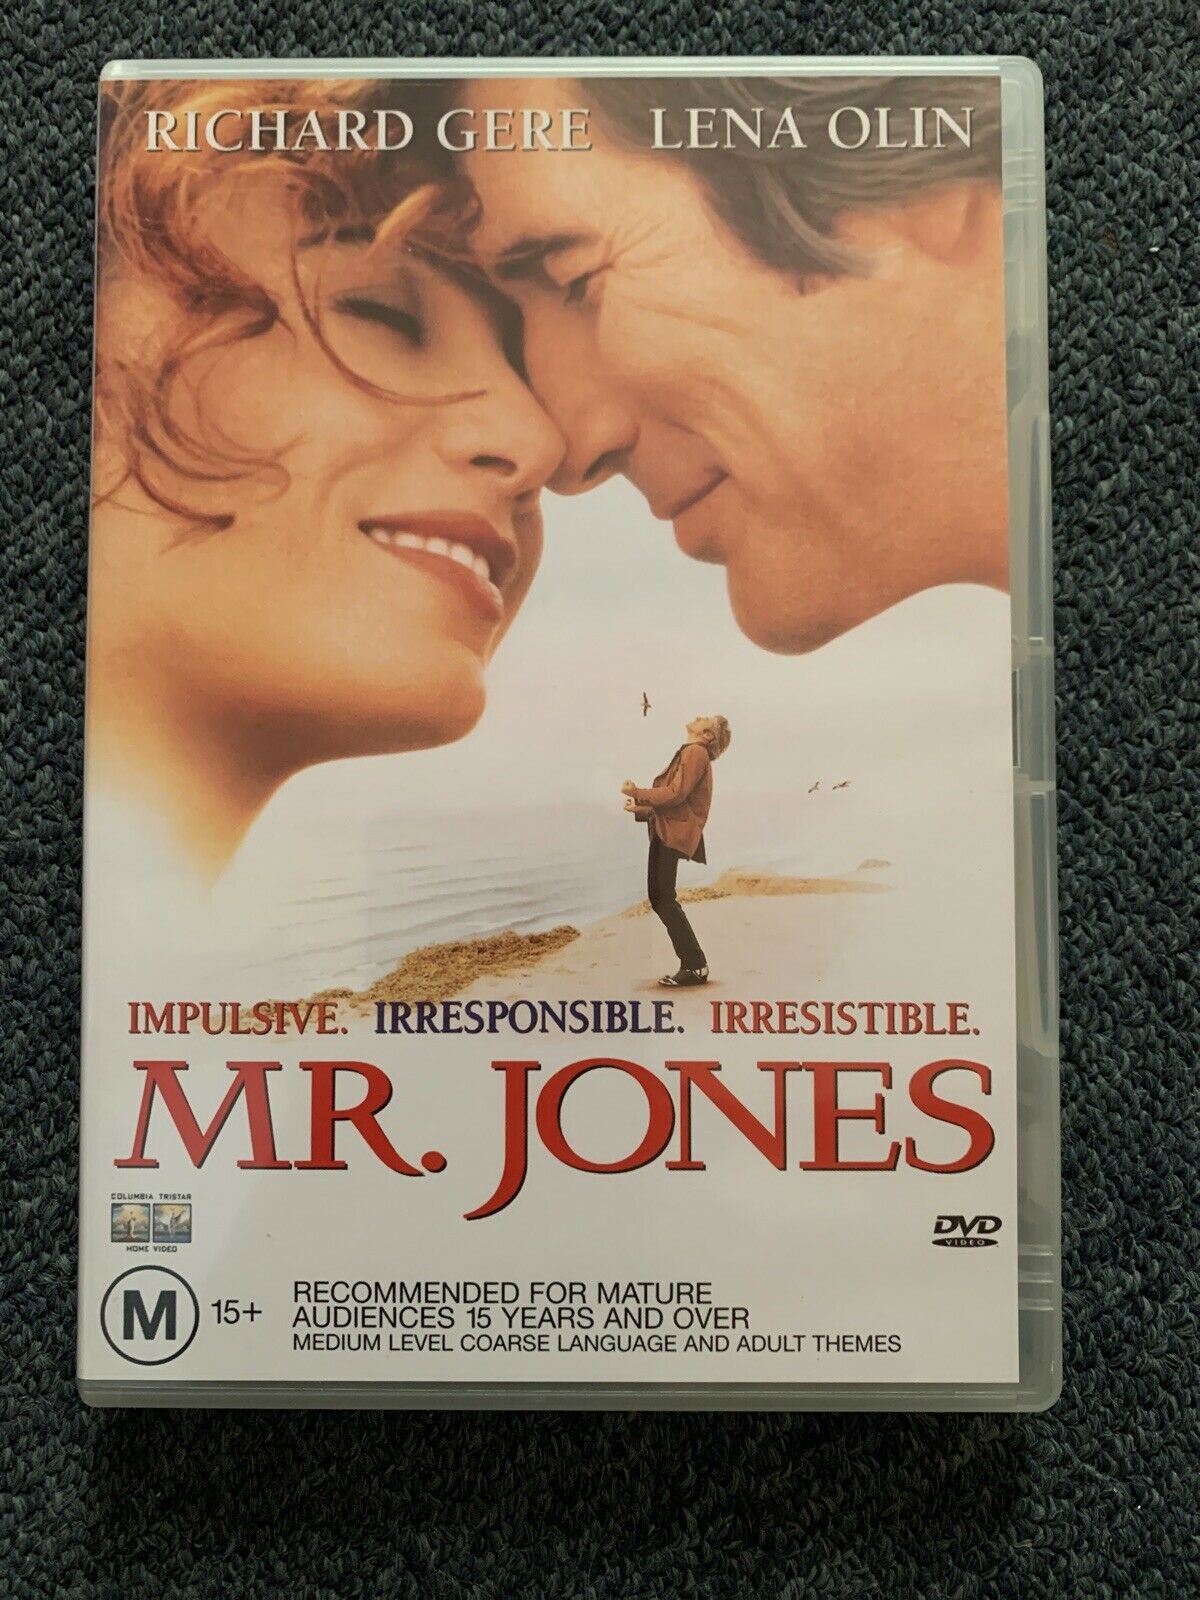 Mr Jones (DVD, 2000) Richard Gere, Lena Olin. Region 4